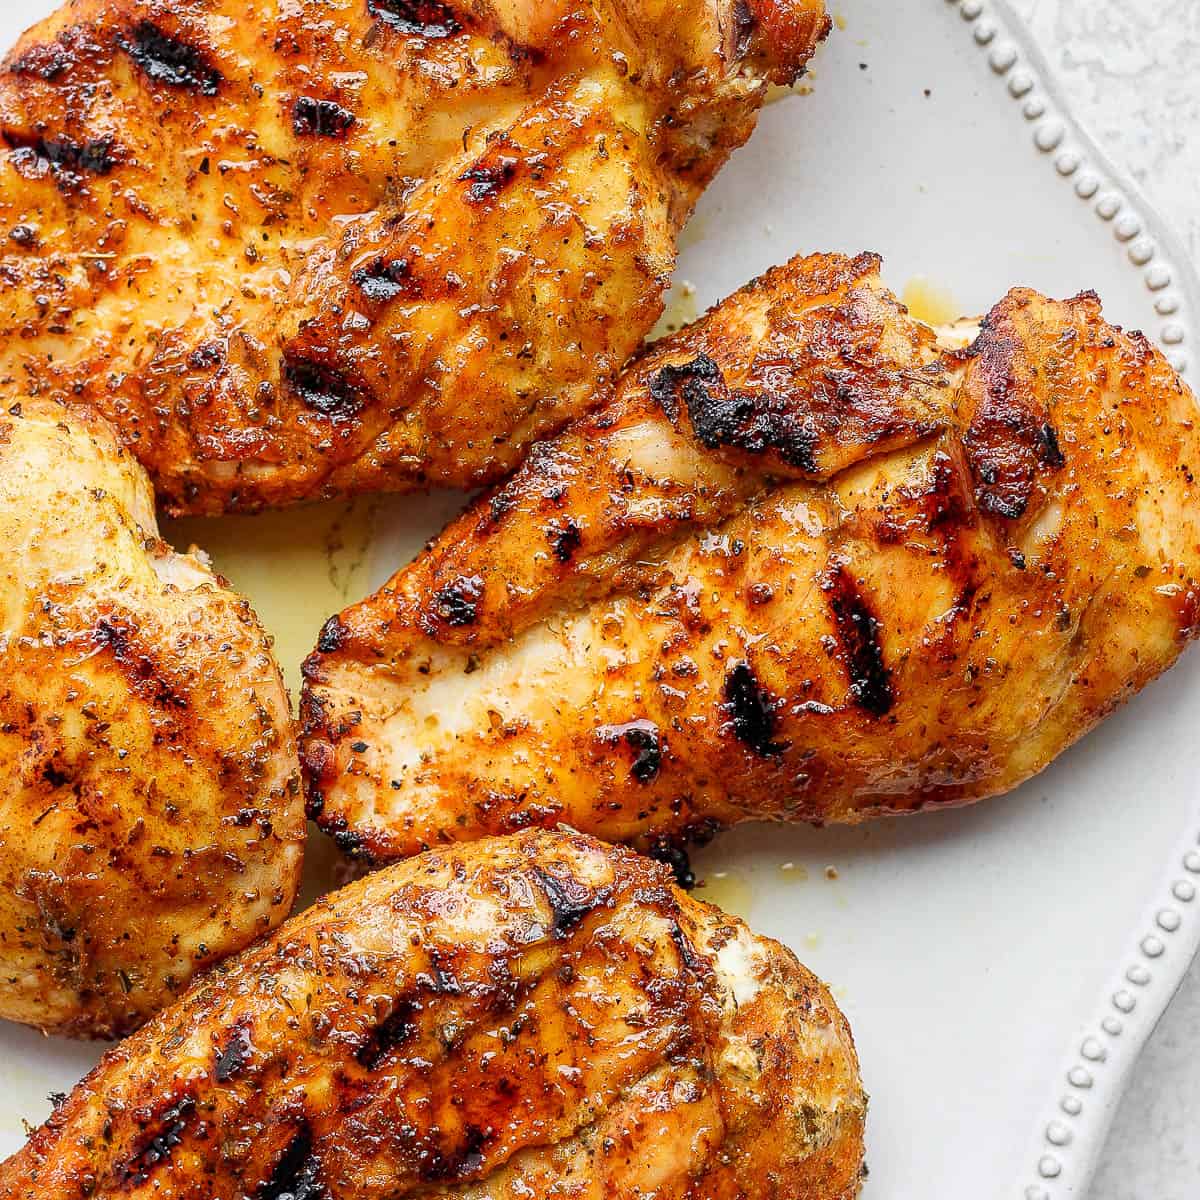 12 Smoked Chicken Breast Recipes - More Chicken Recipes